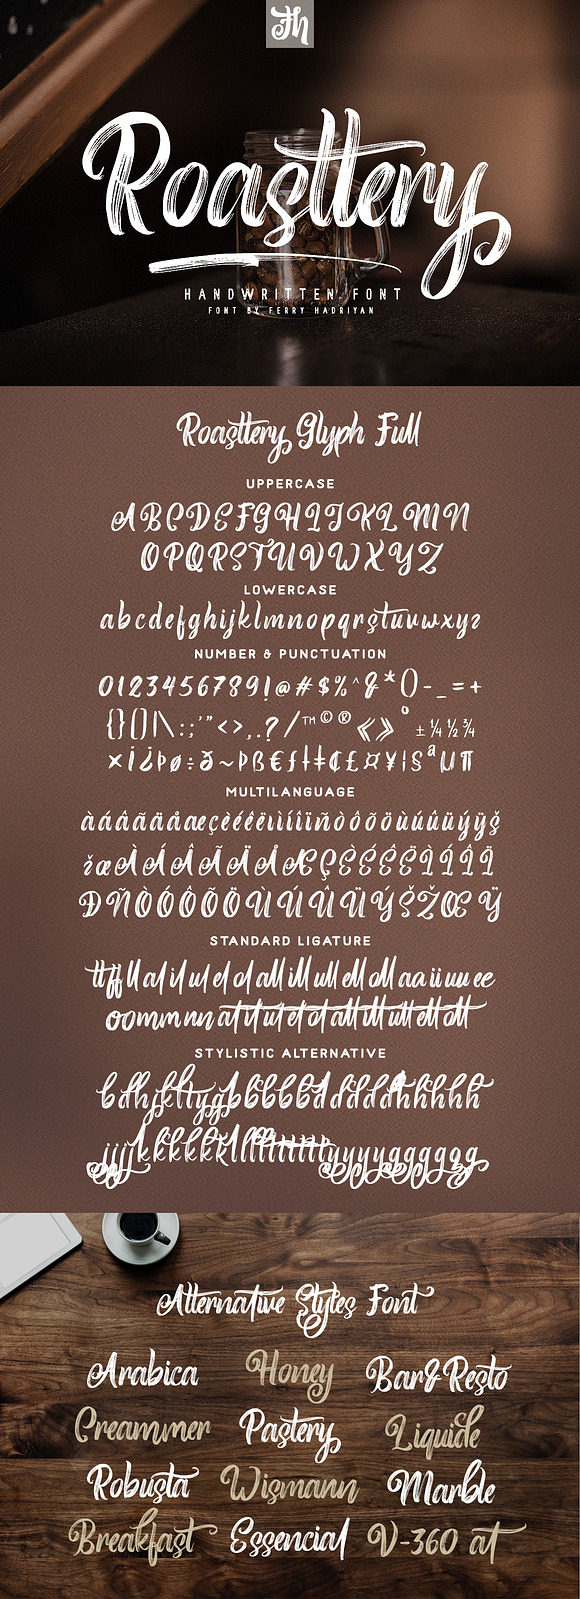 Roasttery - Handwritten Font in Script Fonts - product preview 10